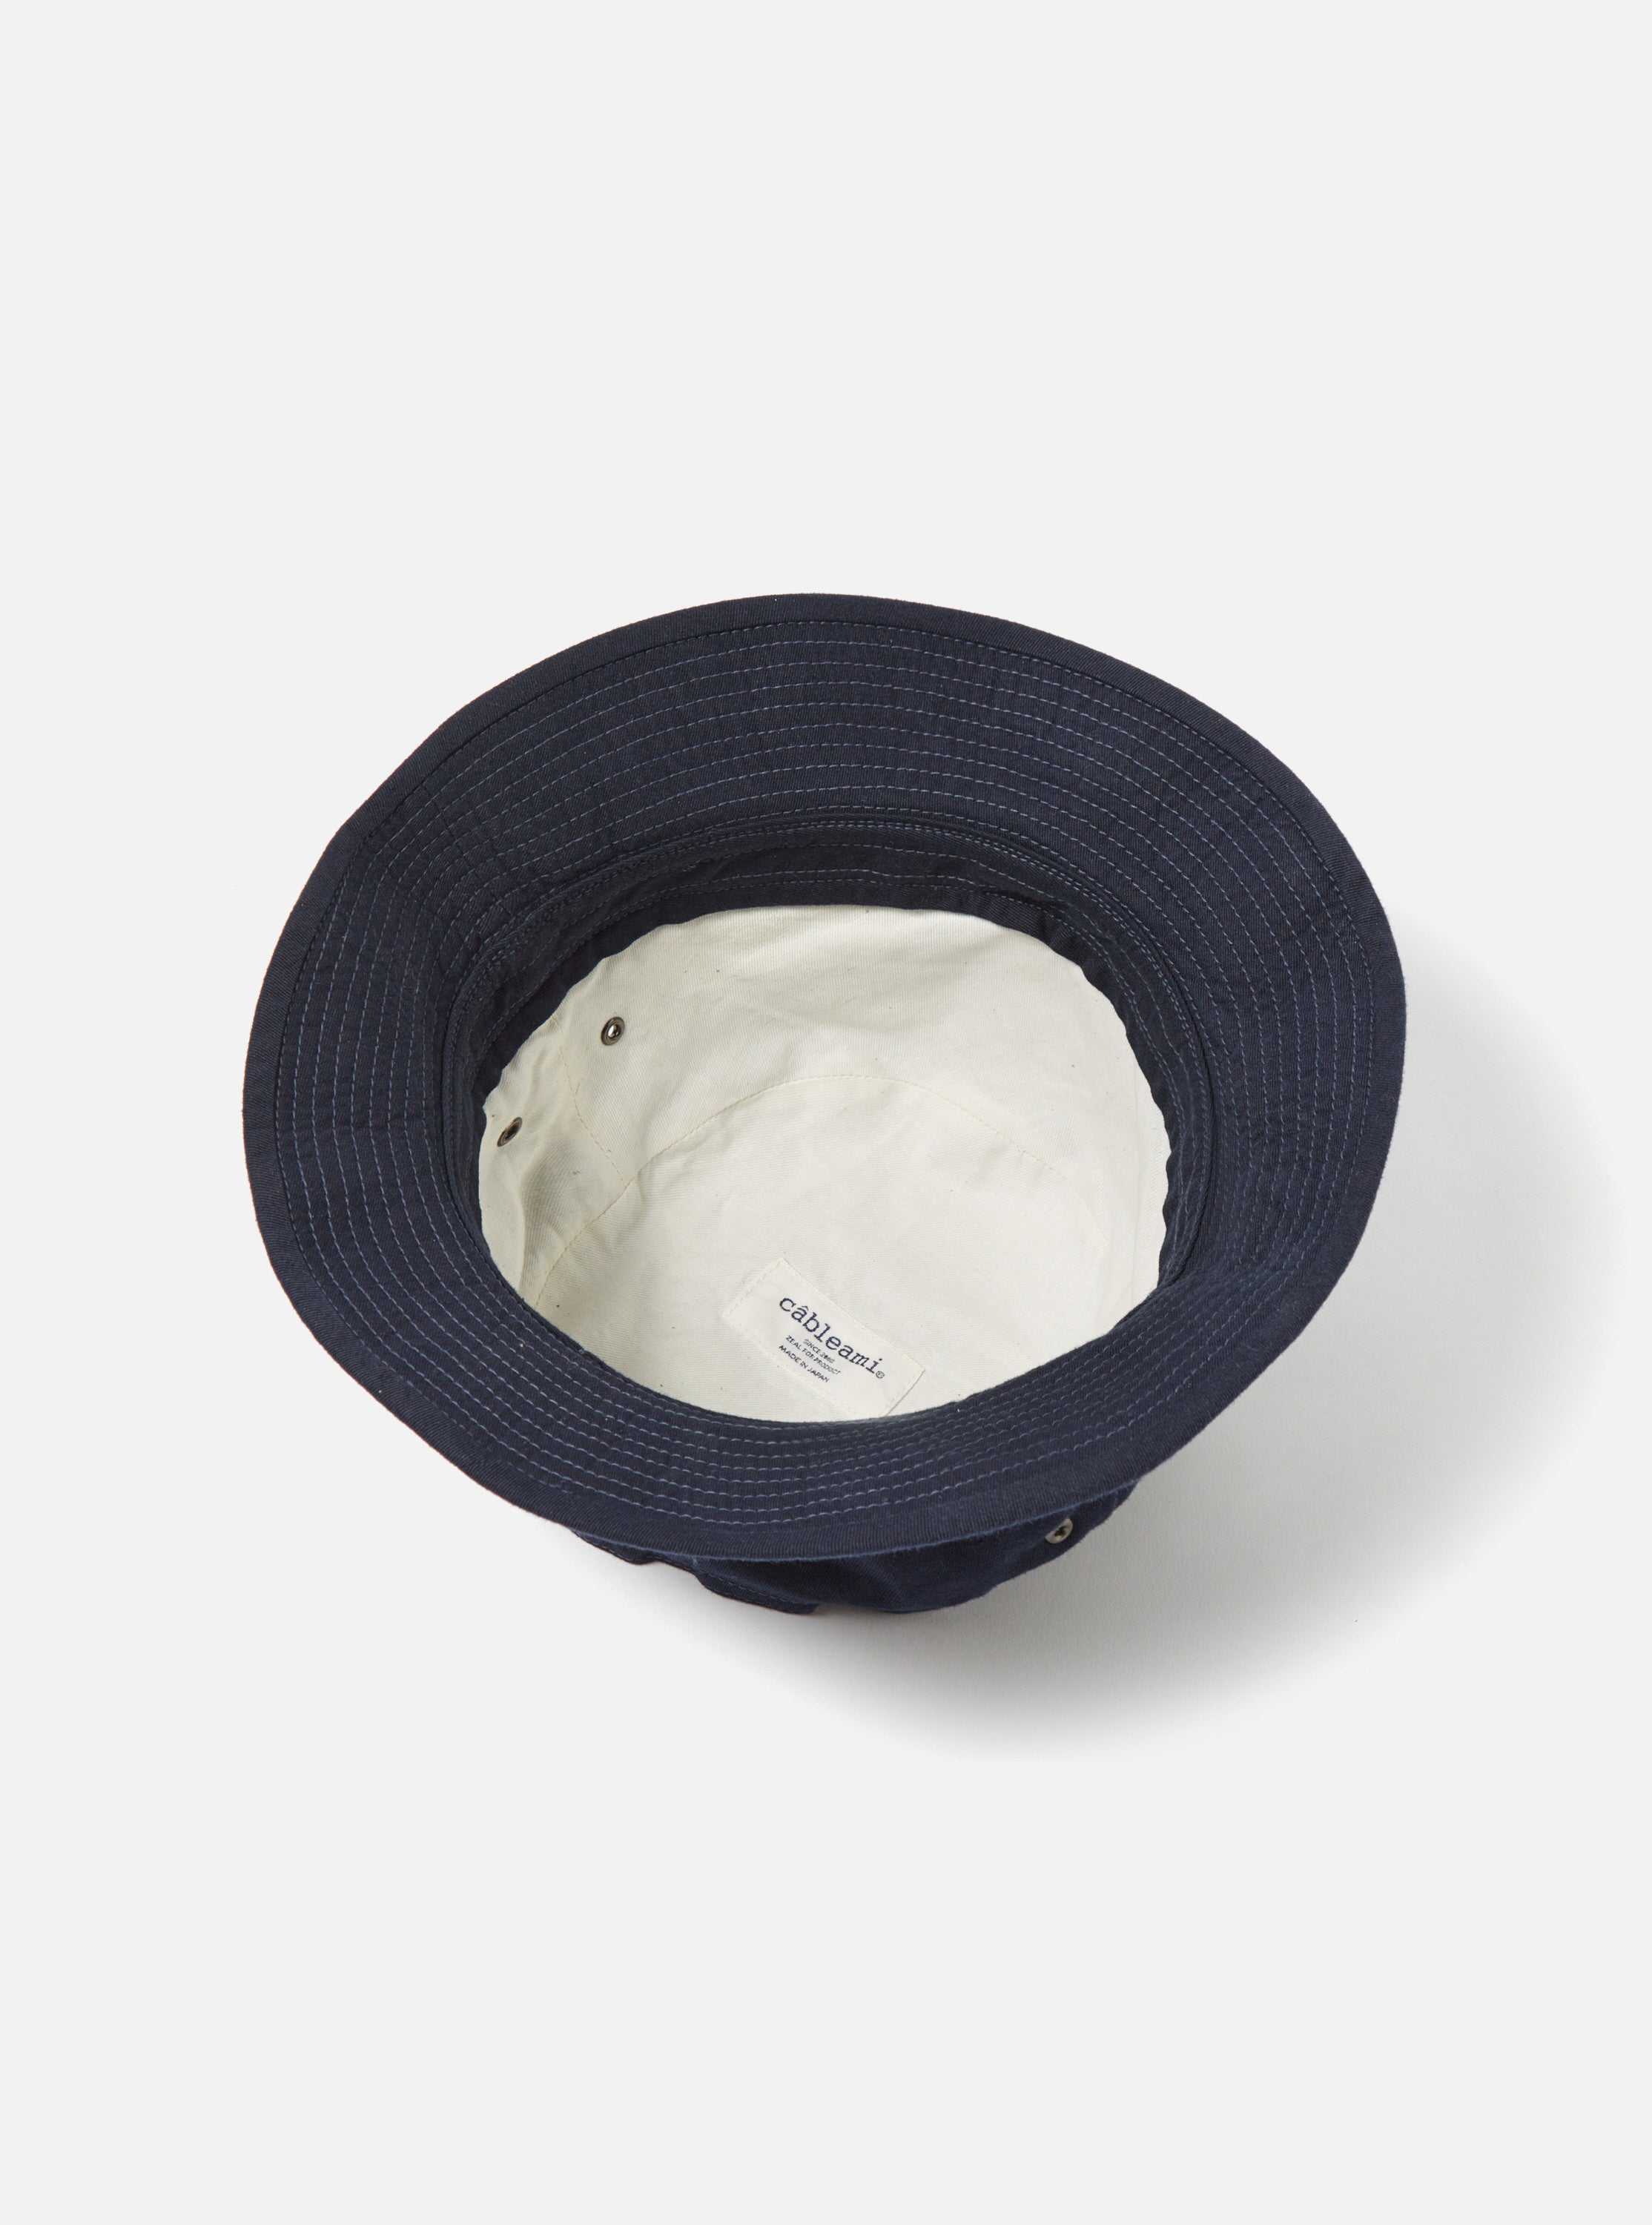 cableami® Pork Pie Hat in Navy Chino Cotton